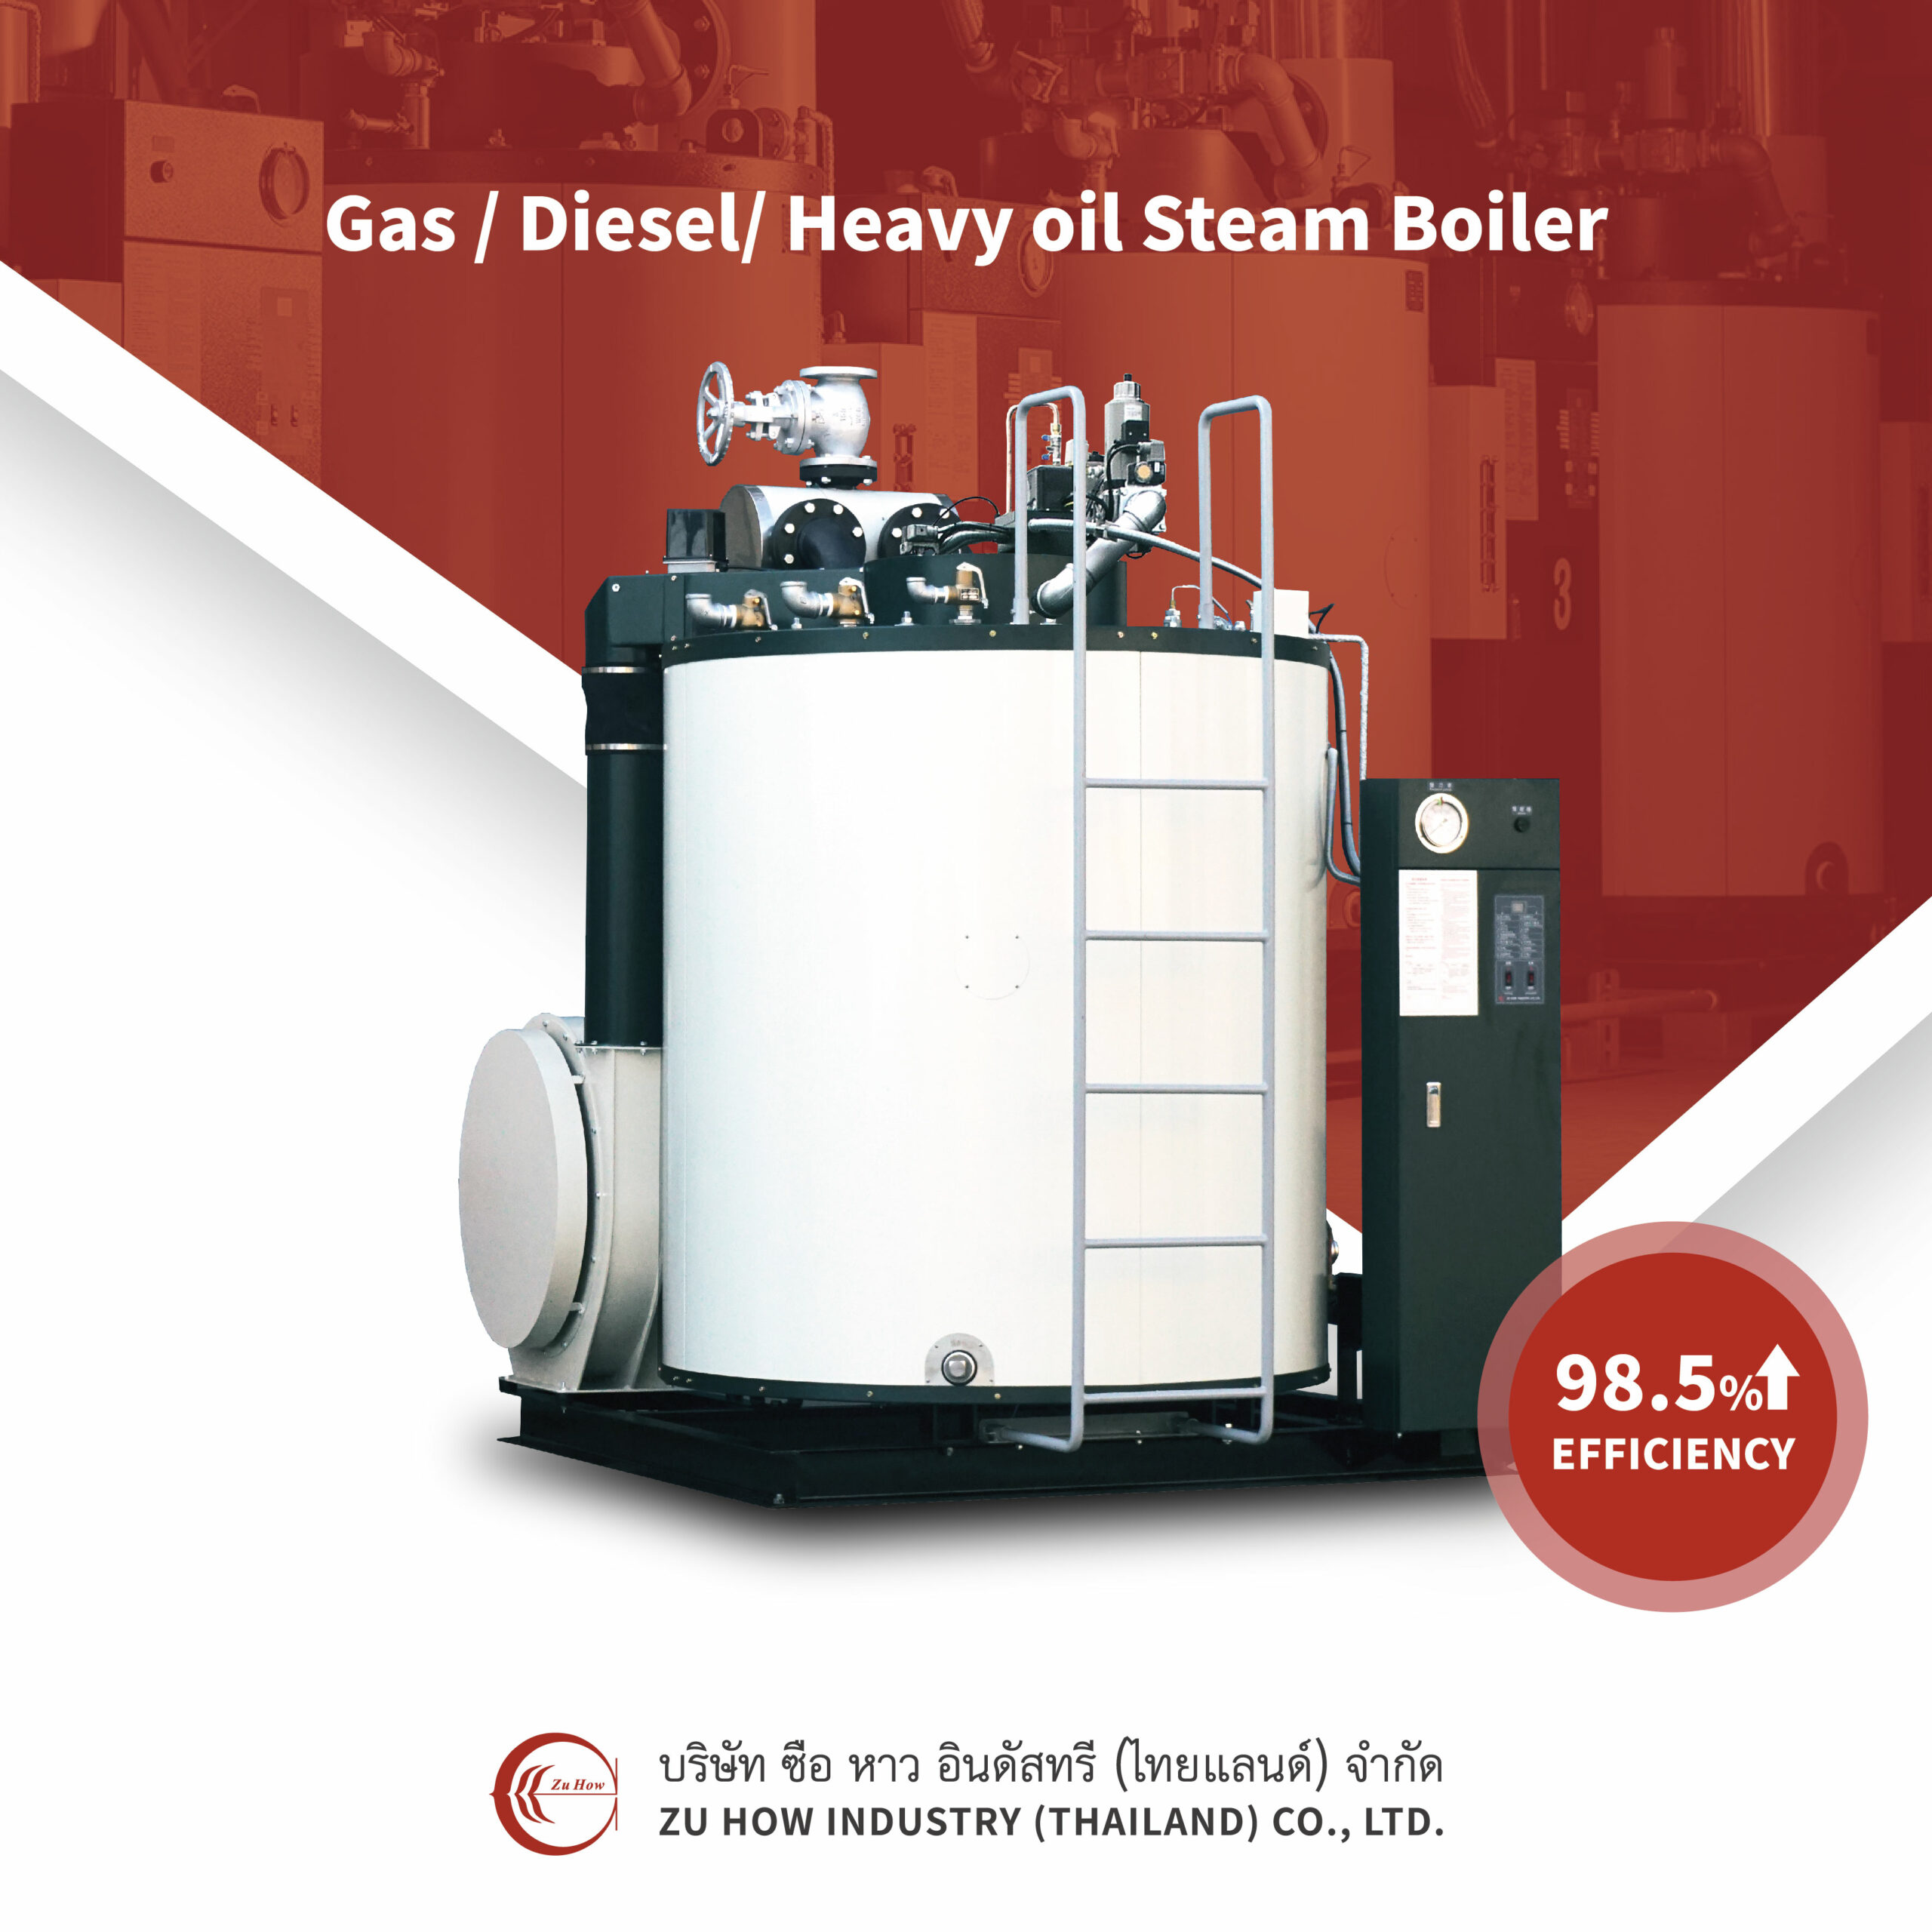 Gas / Diesel / Heavy oil Steam Boiler